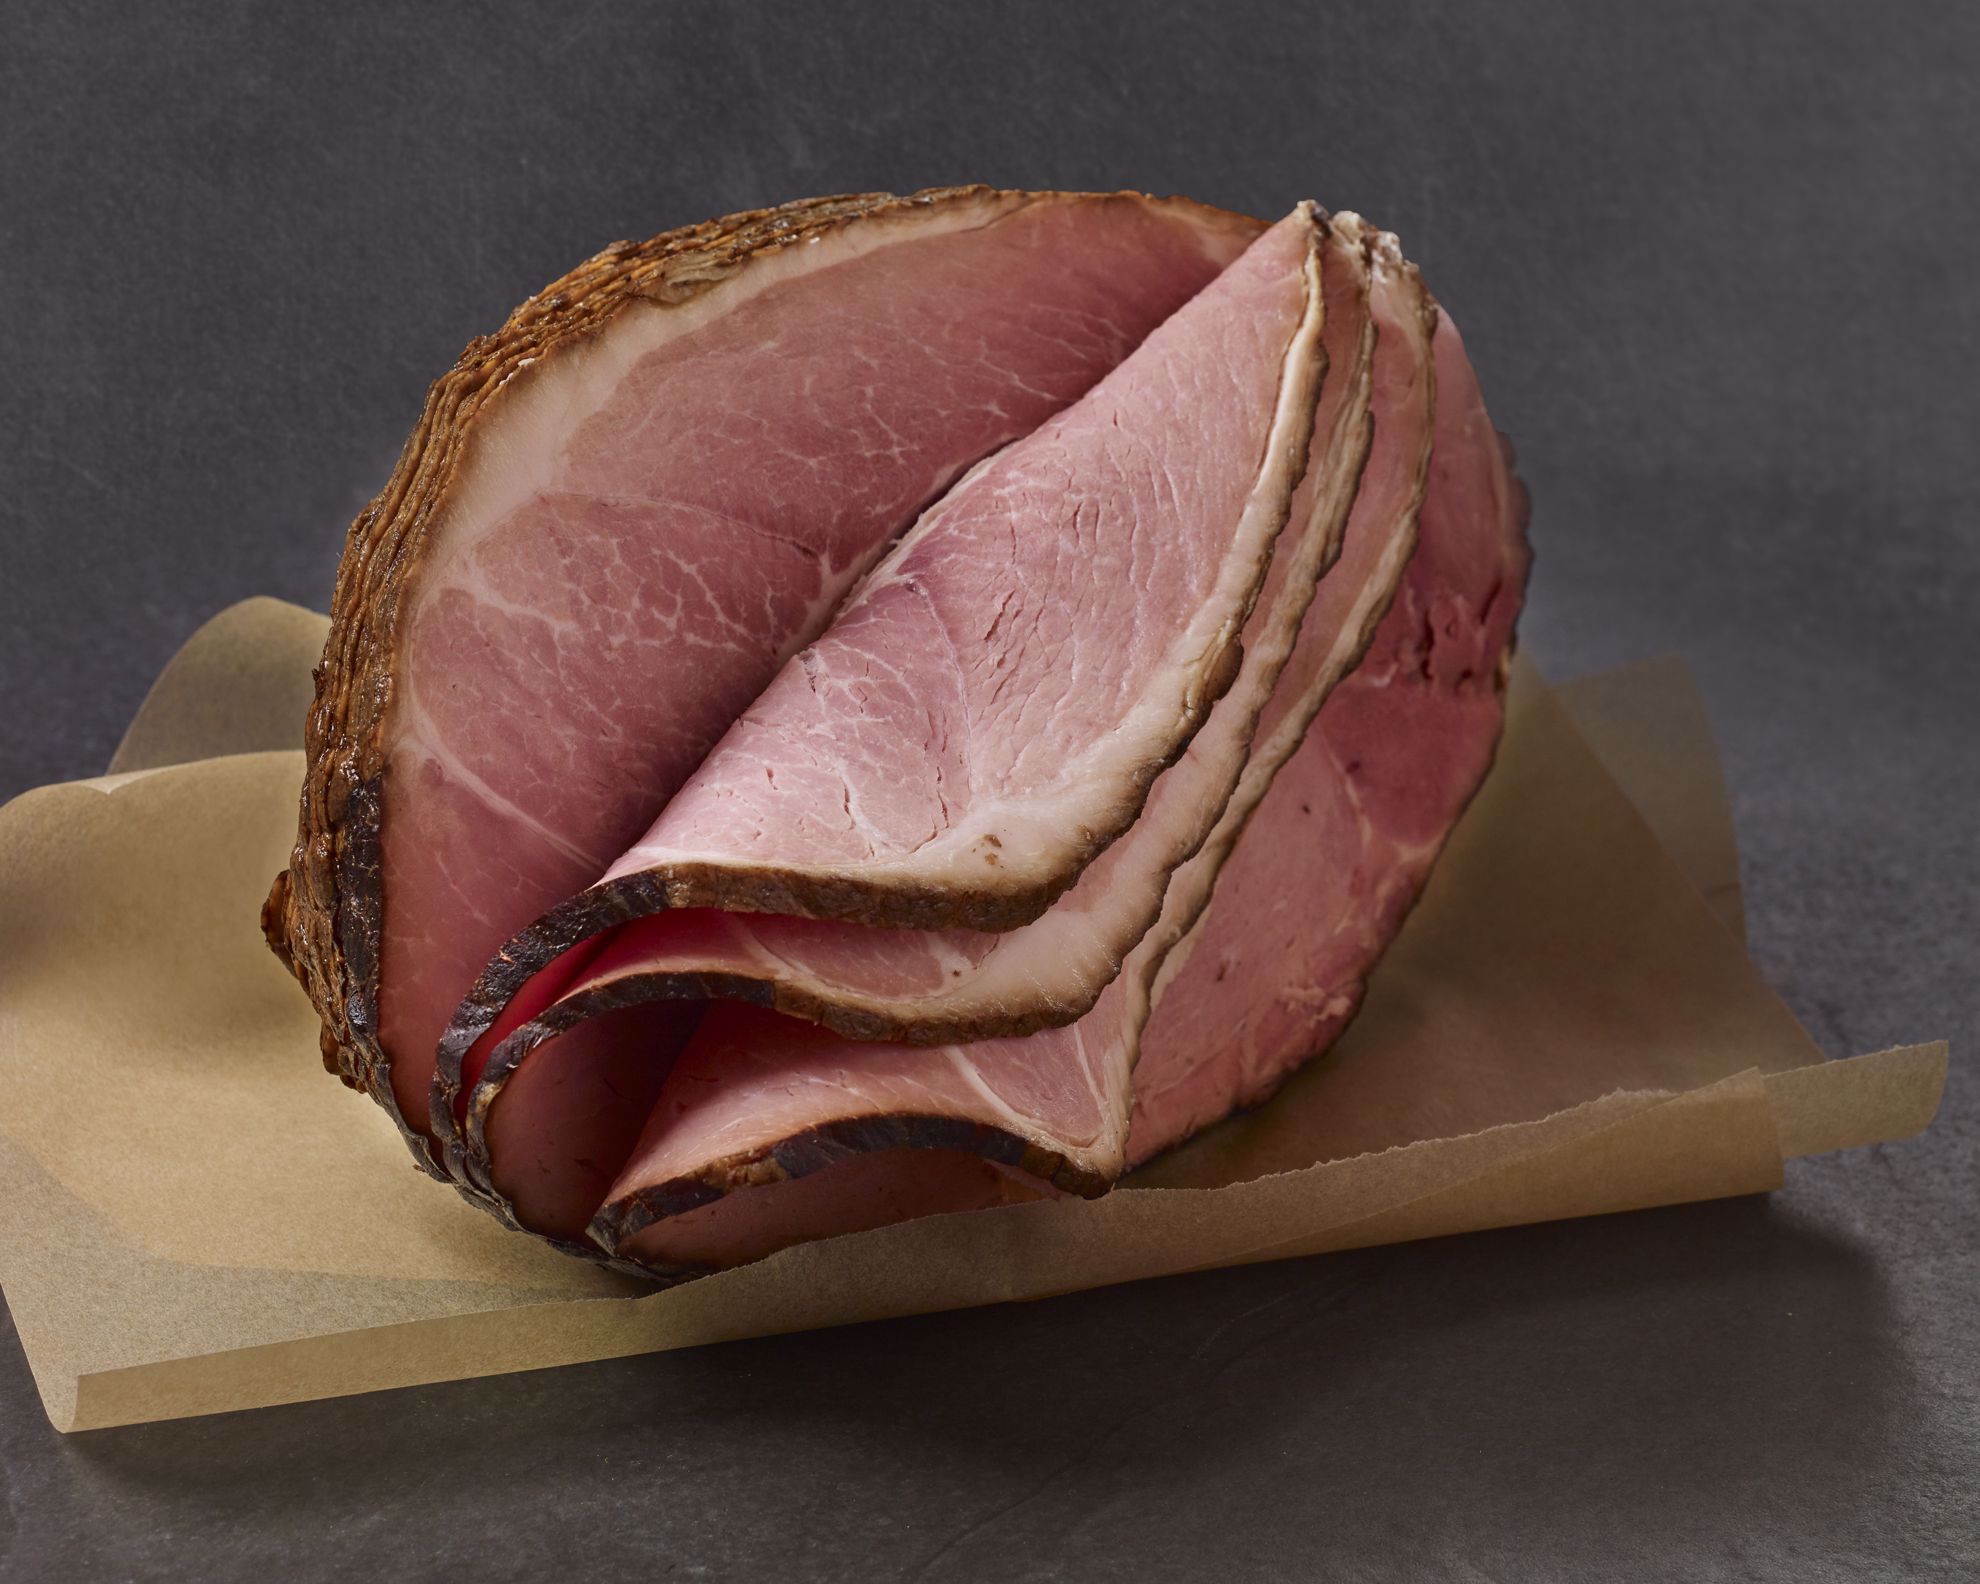 Spiral-Cut Half Smoked Ham (Bone-In) 